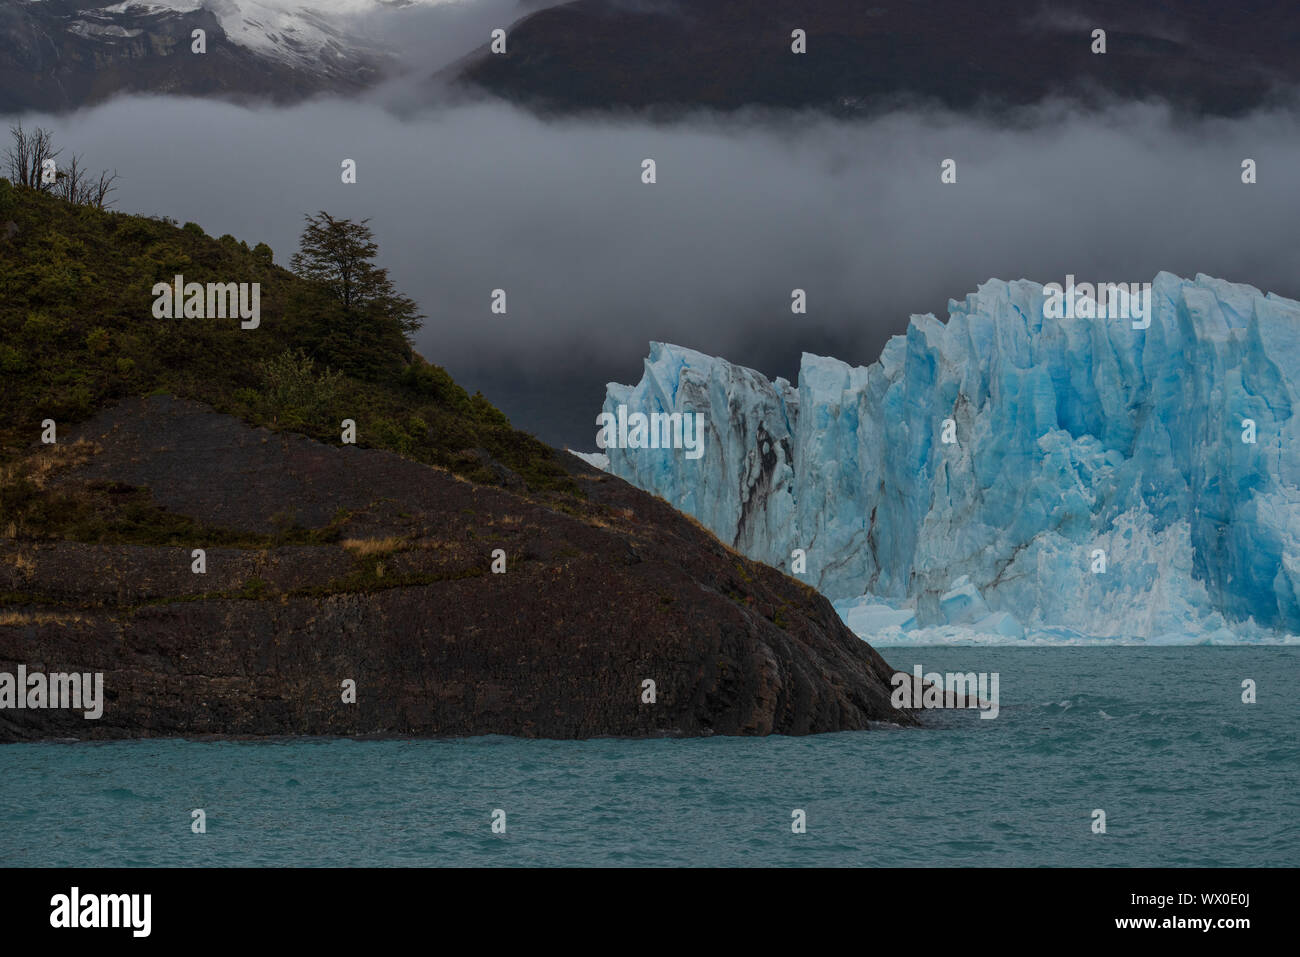 Le Glacier Perito Moreno dans le Parc National Los Glaciares, UNESCO World Heritage Site, Province de Santa Cruz, en Patagonie, Argentine, Amérique du Sud Banque D'Images